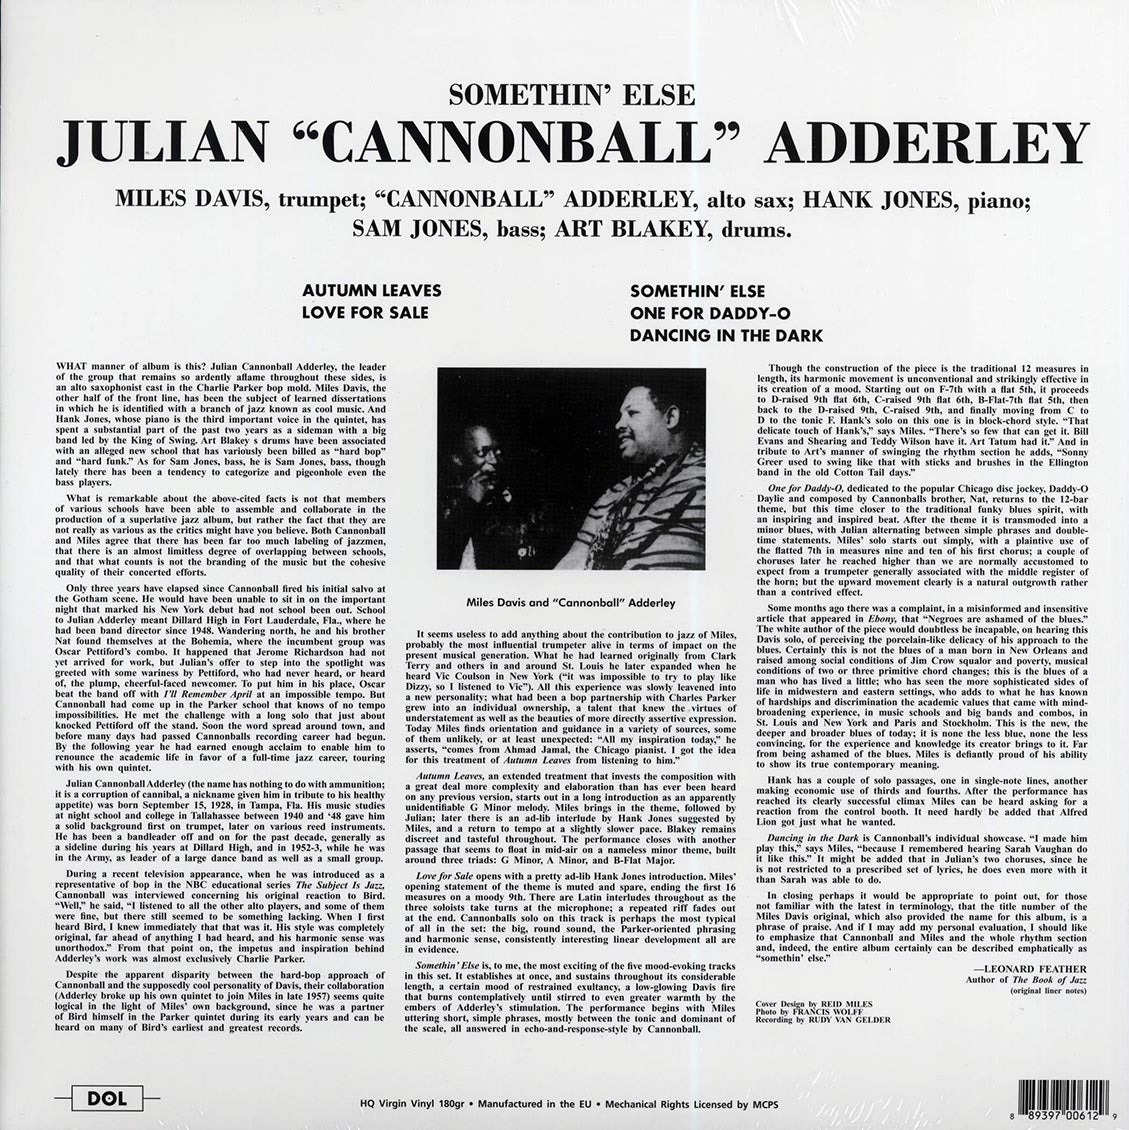 Cannonball Adderley - Somethin' Else (180g) (colored vinyl) - Vinyl LP, LP